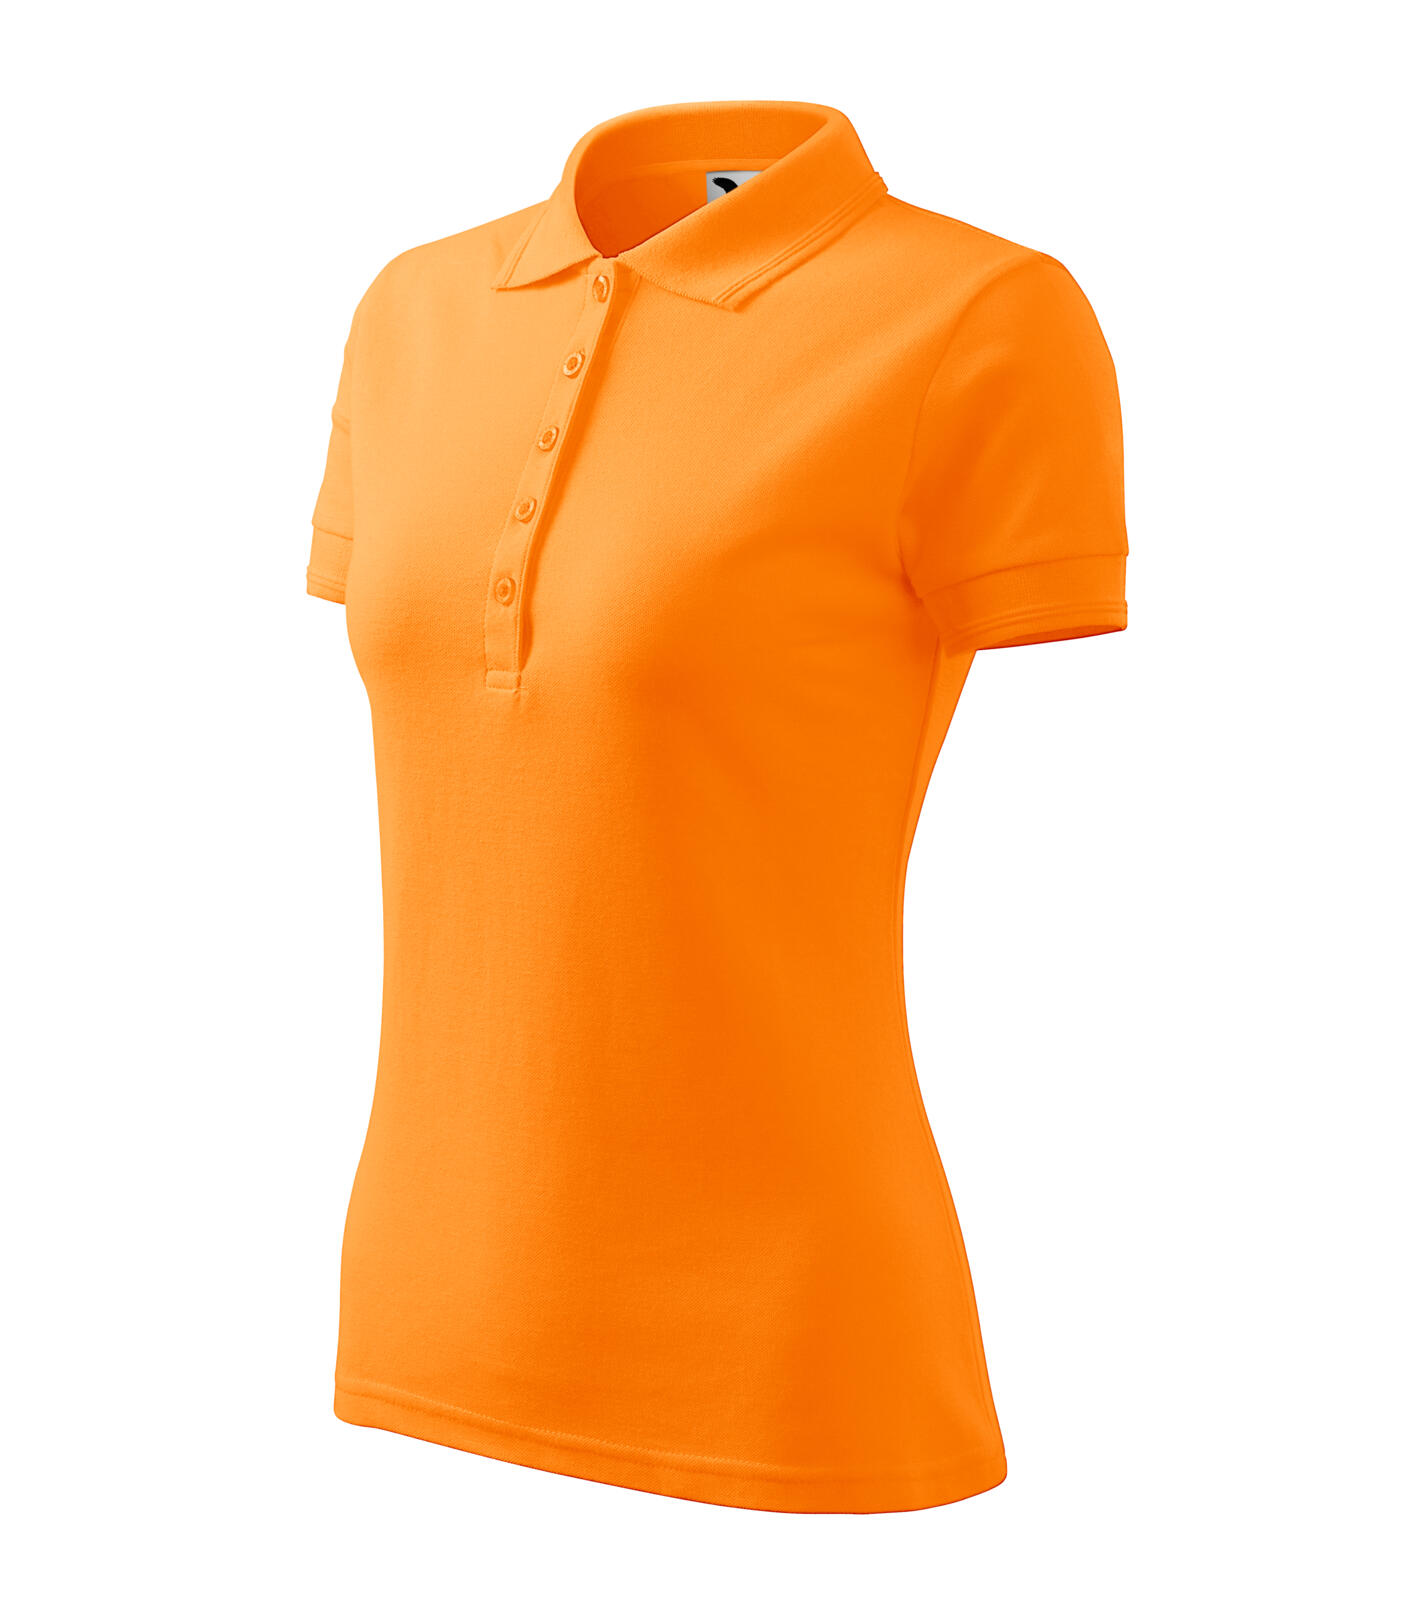 Pique Polo Polokošile dámská Barva: tangerine orange, Velikost: XL